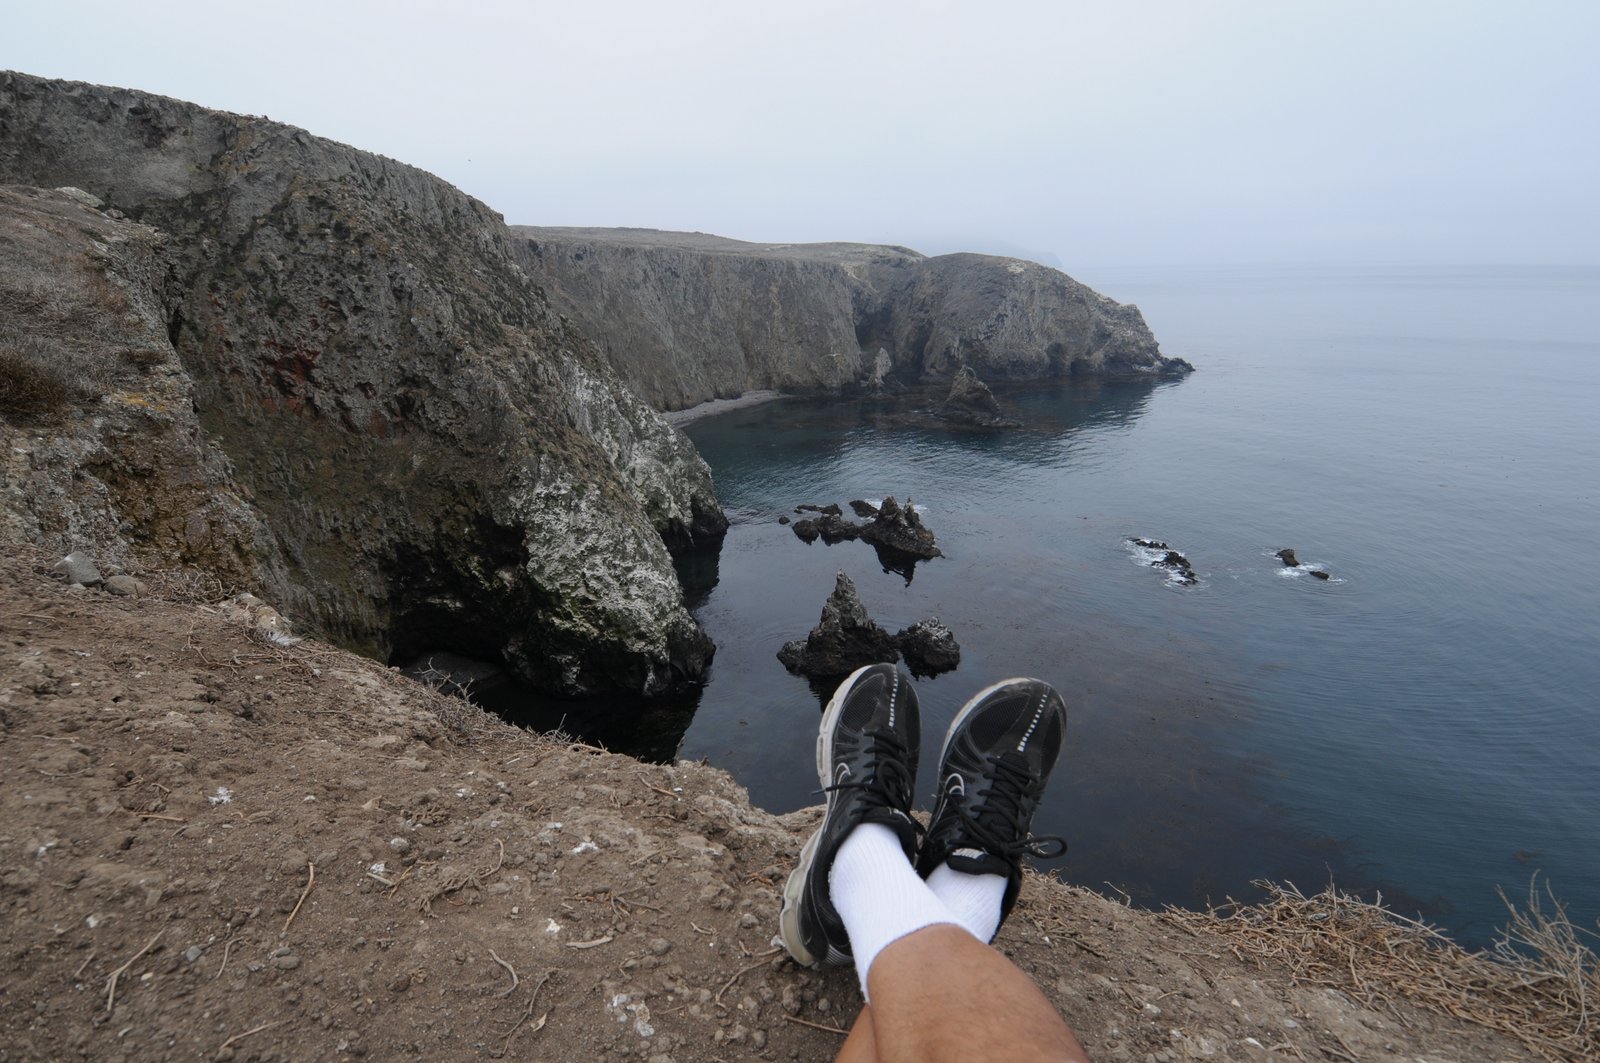 My feet on the edge of Anacapa Island